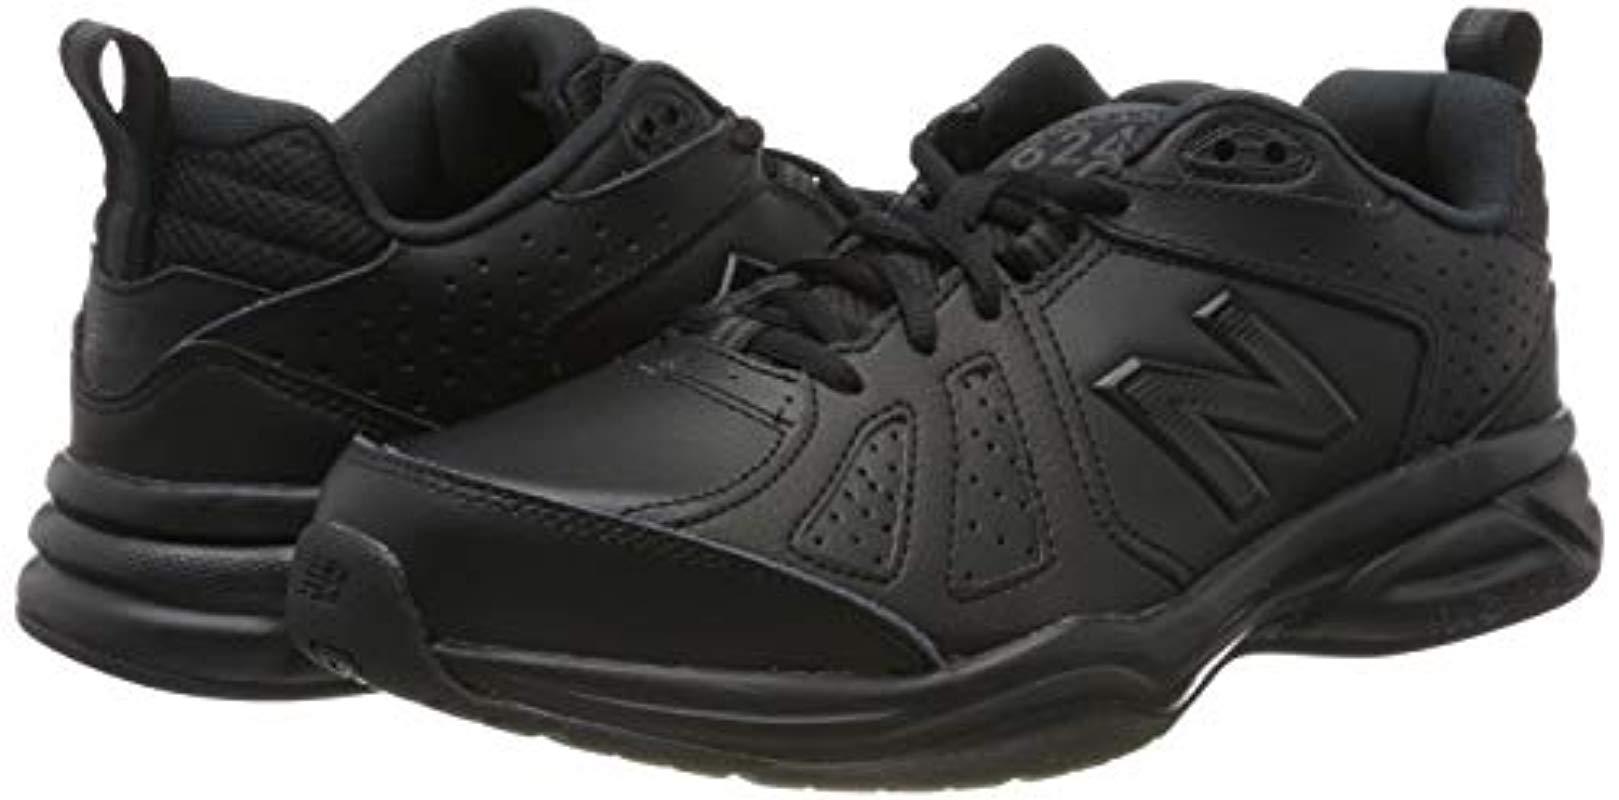 New Balance 624v5 Fitness Shoes in Black (Black/Black Black/Black ... بائعة الورد